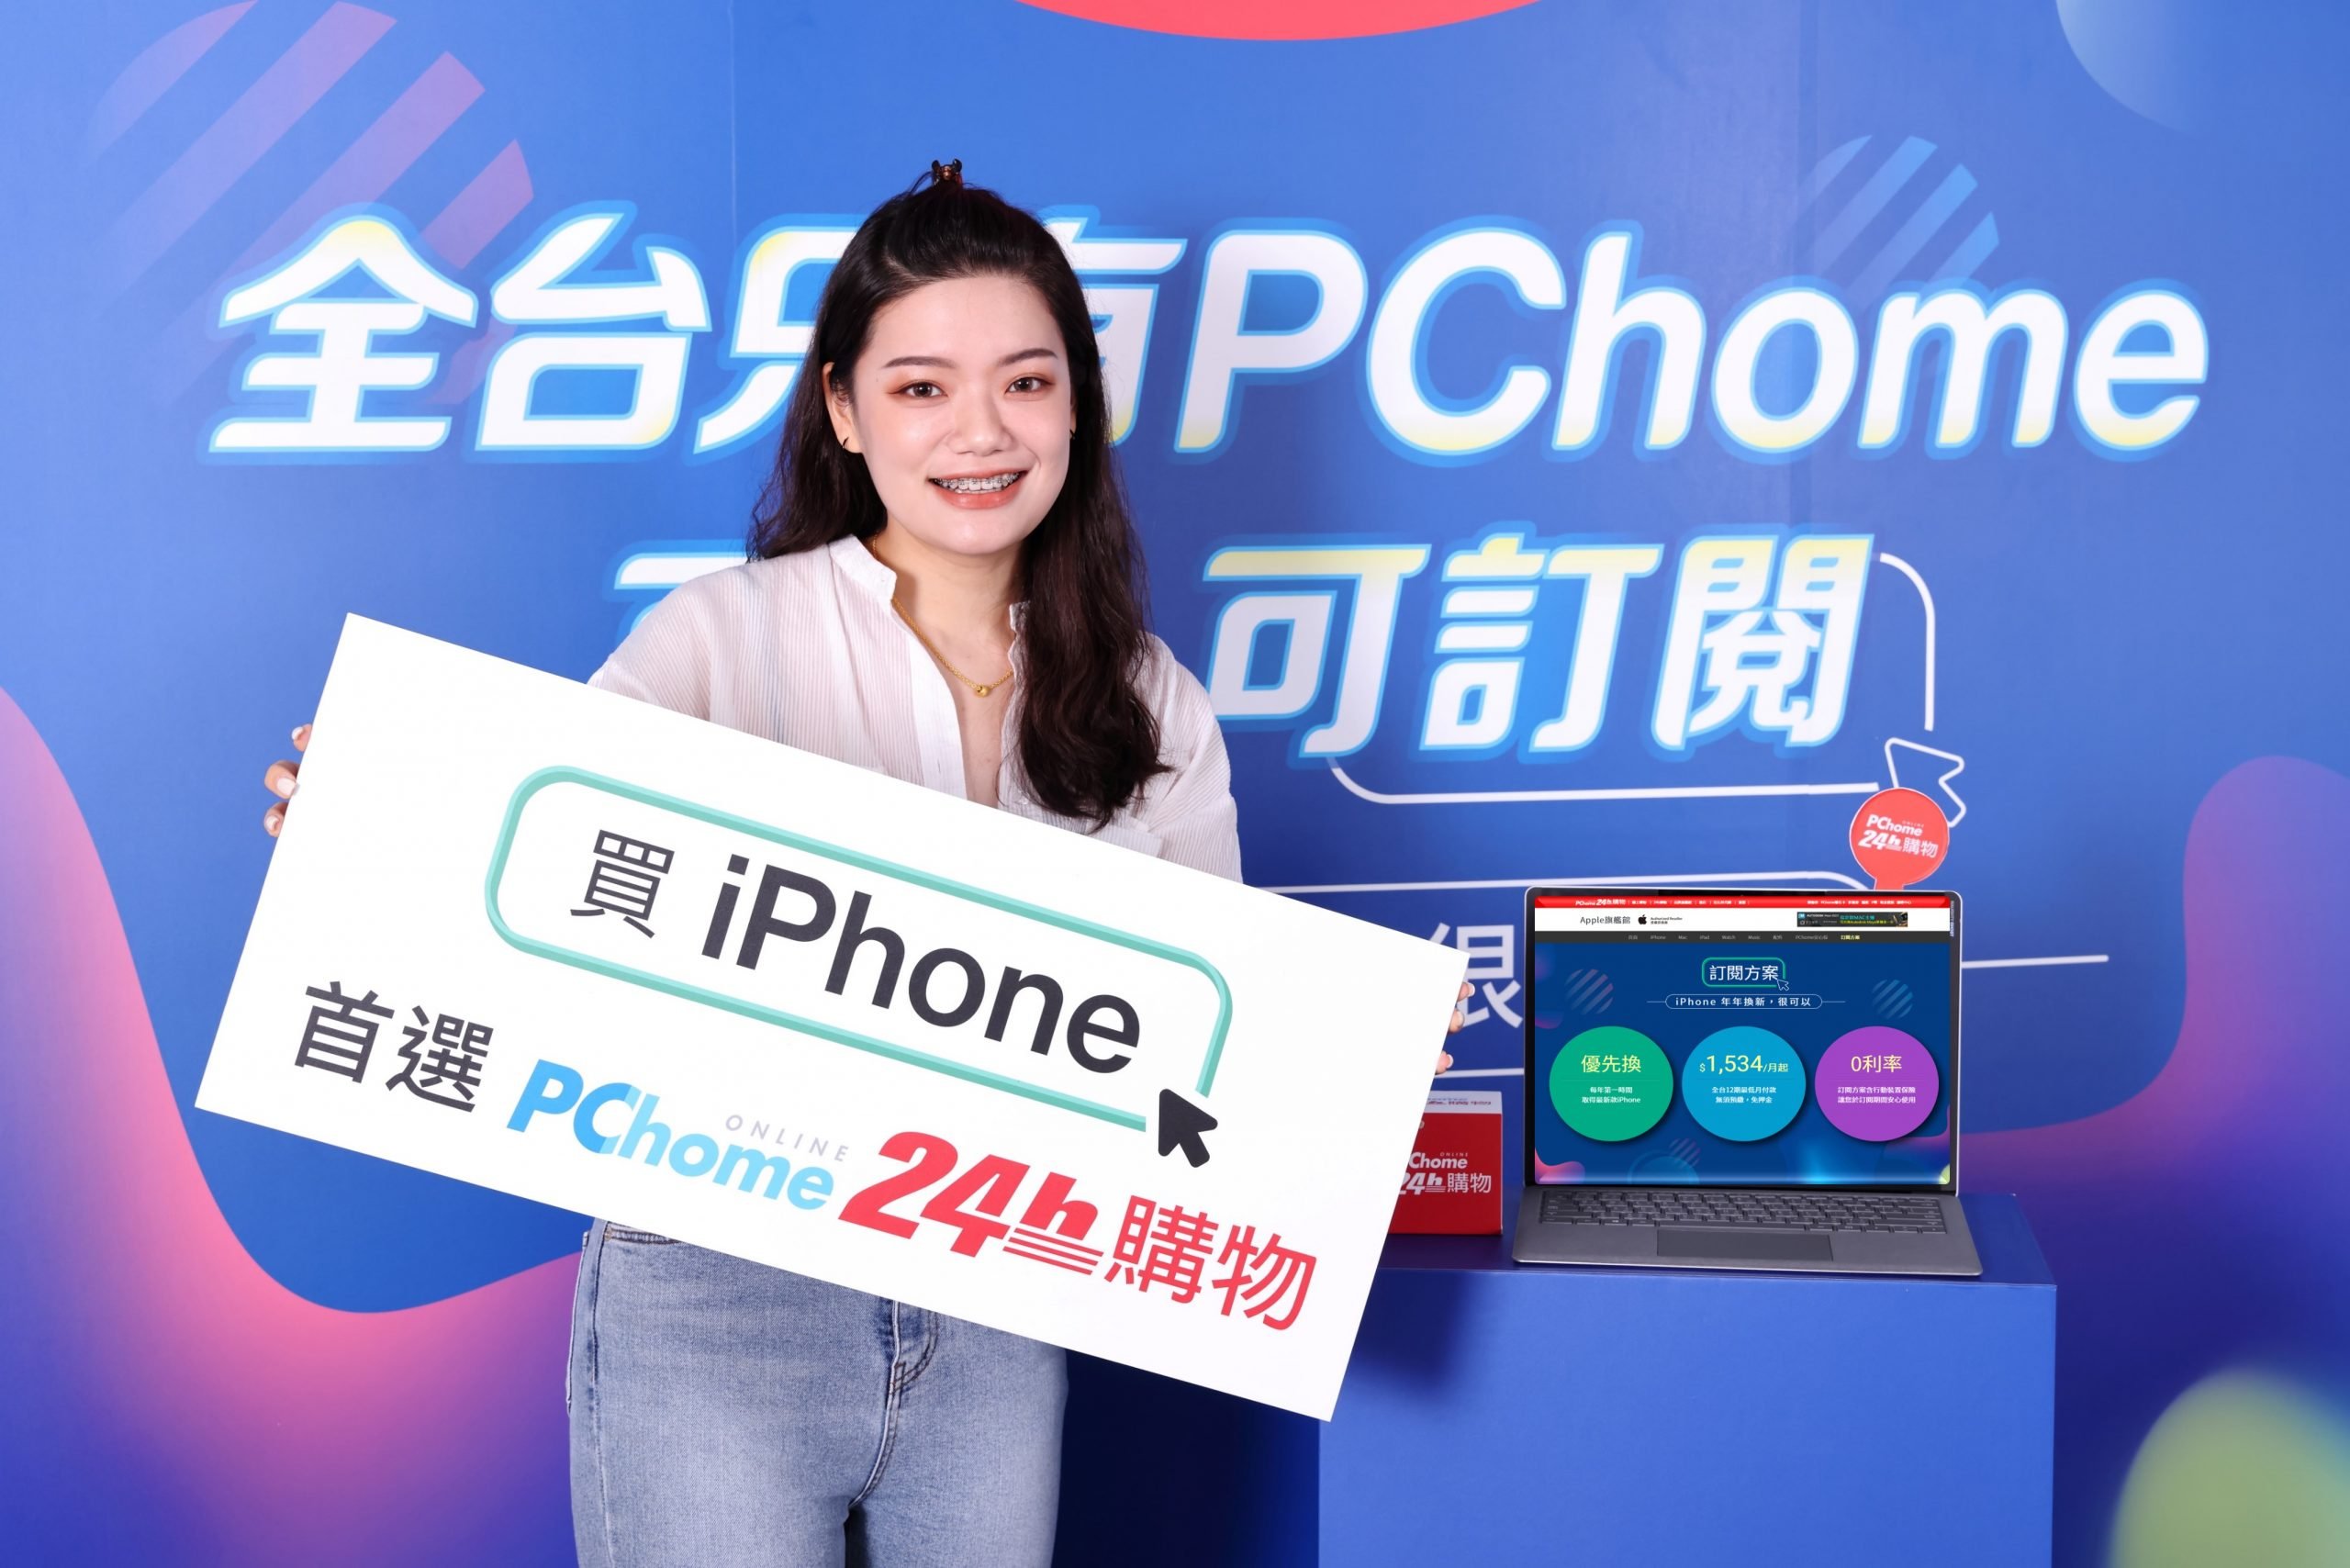 PChome 獨家「iPhone 訂閱方案」服務全面再升級 五大多元新方案一年期滿選擇更自由 @3C 達人廖阿輝